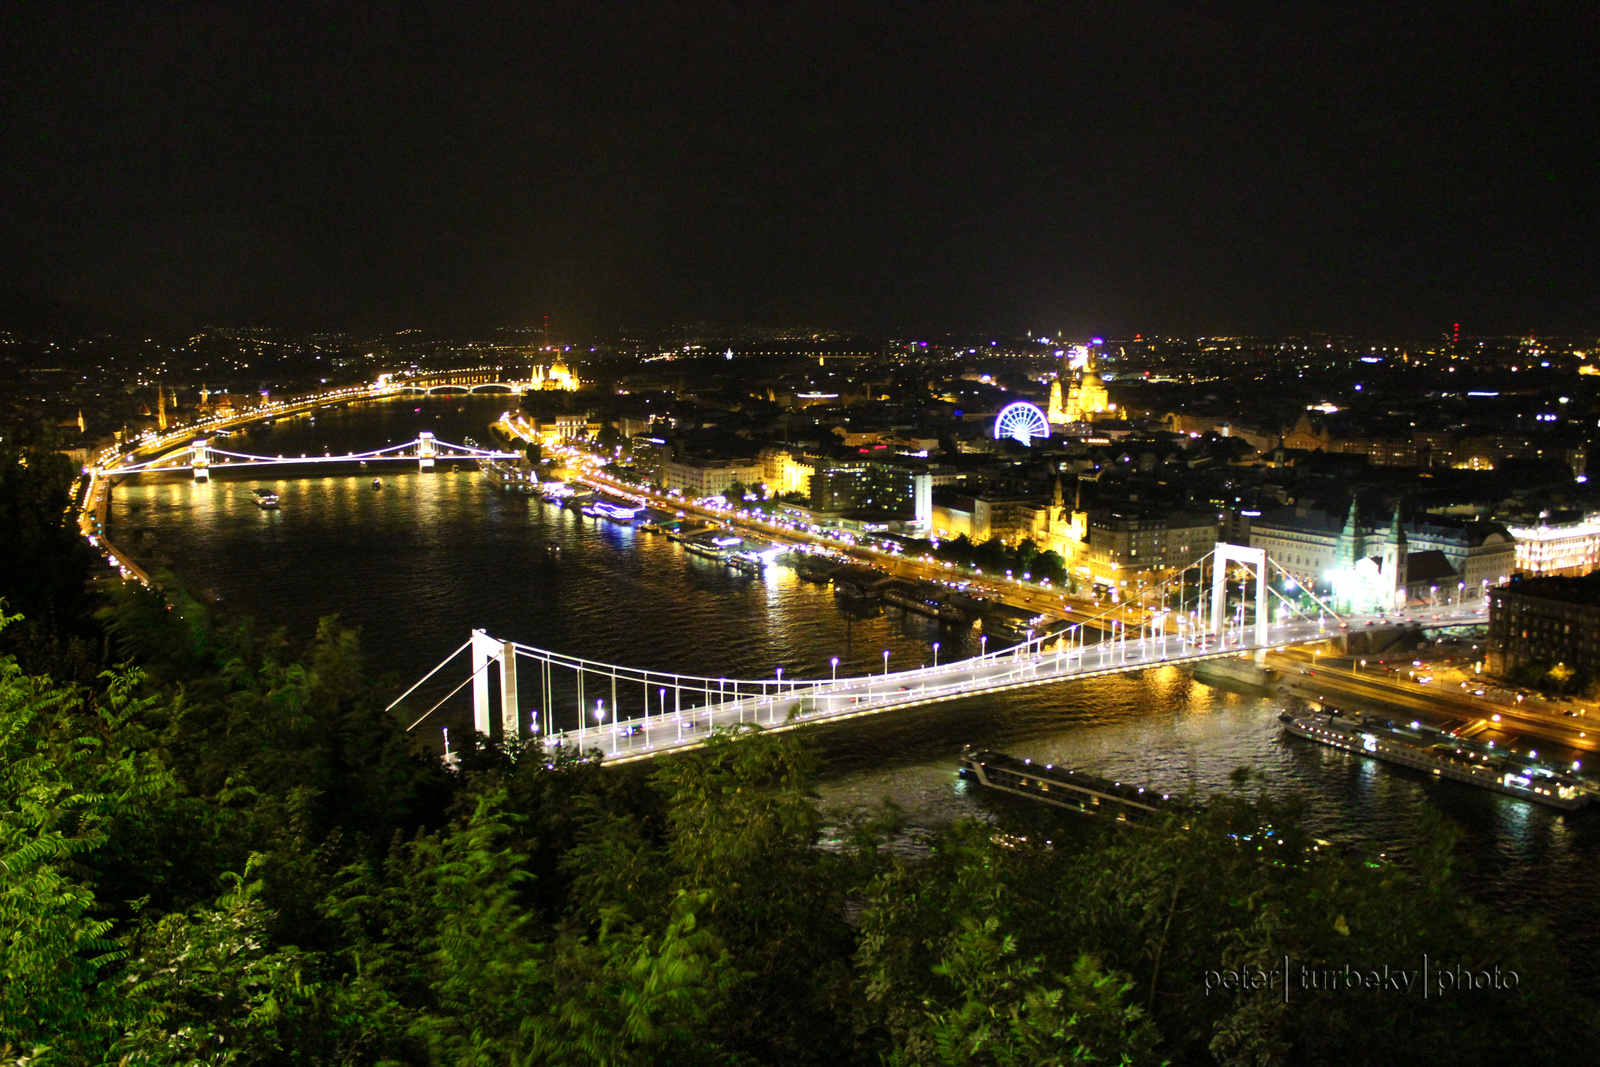 Budapest 5